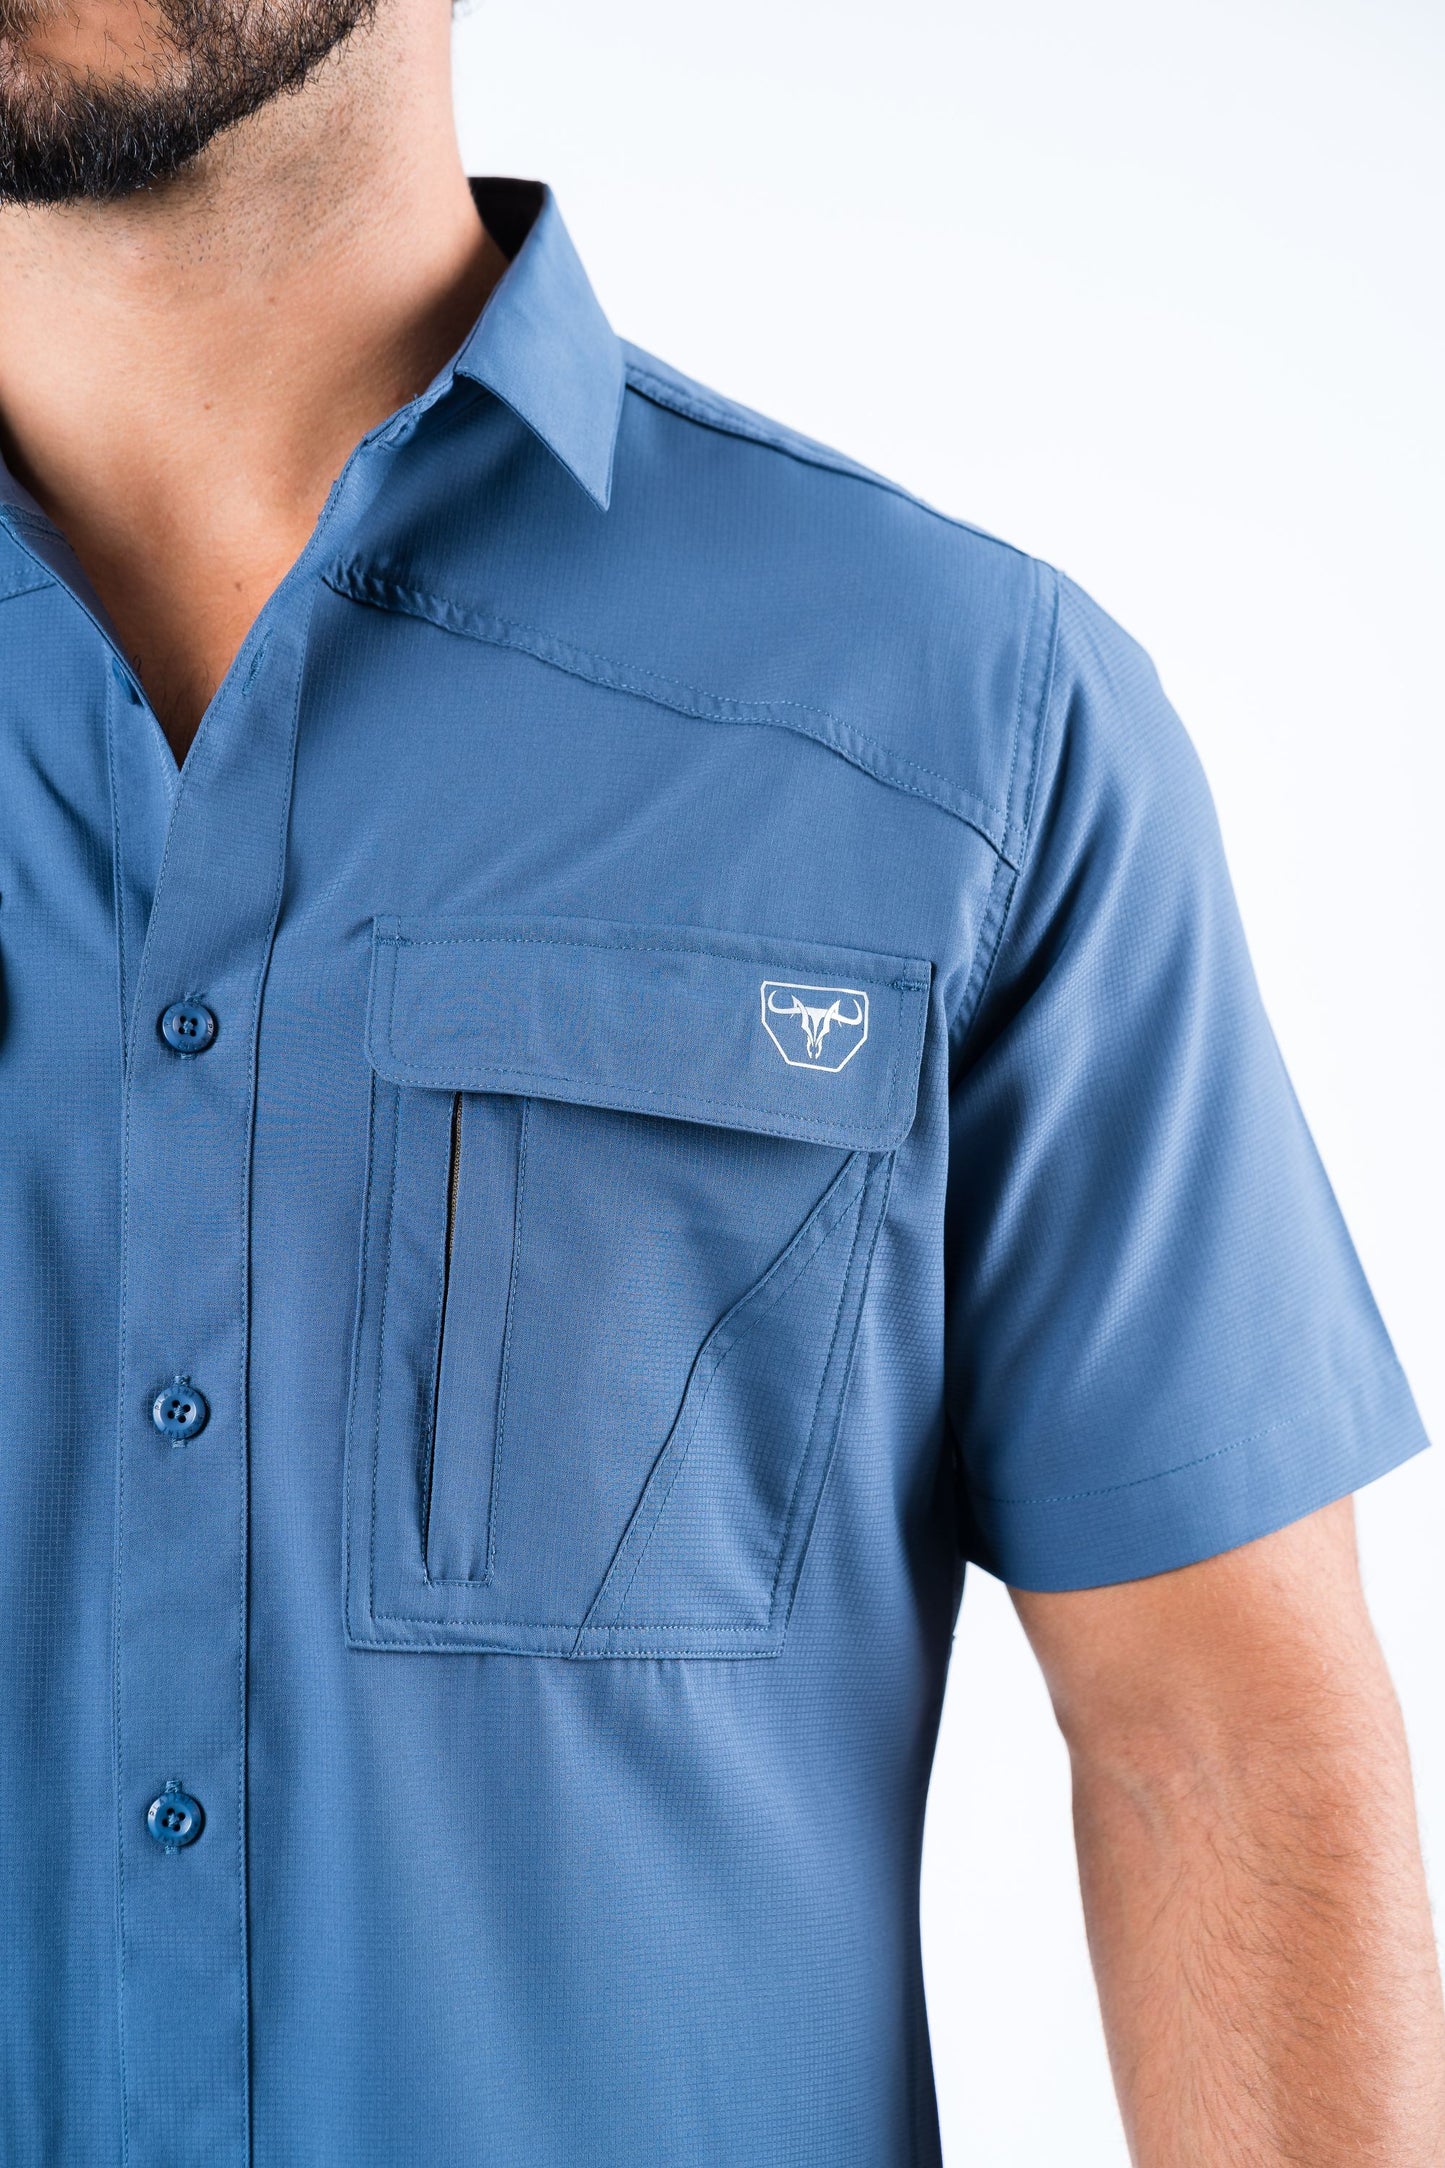 Men's Fishing Blue Short Sleeve Shirt